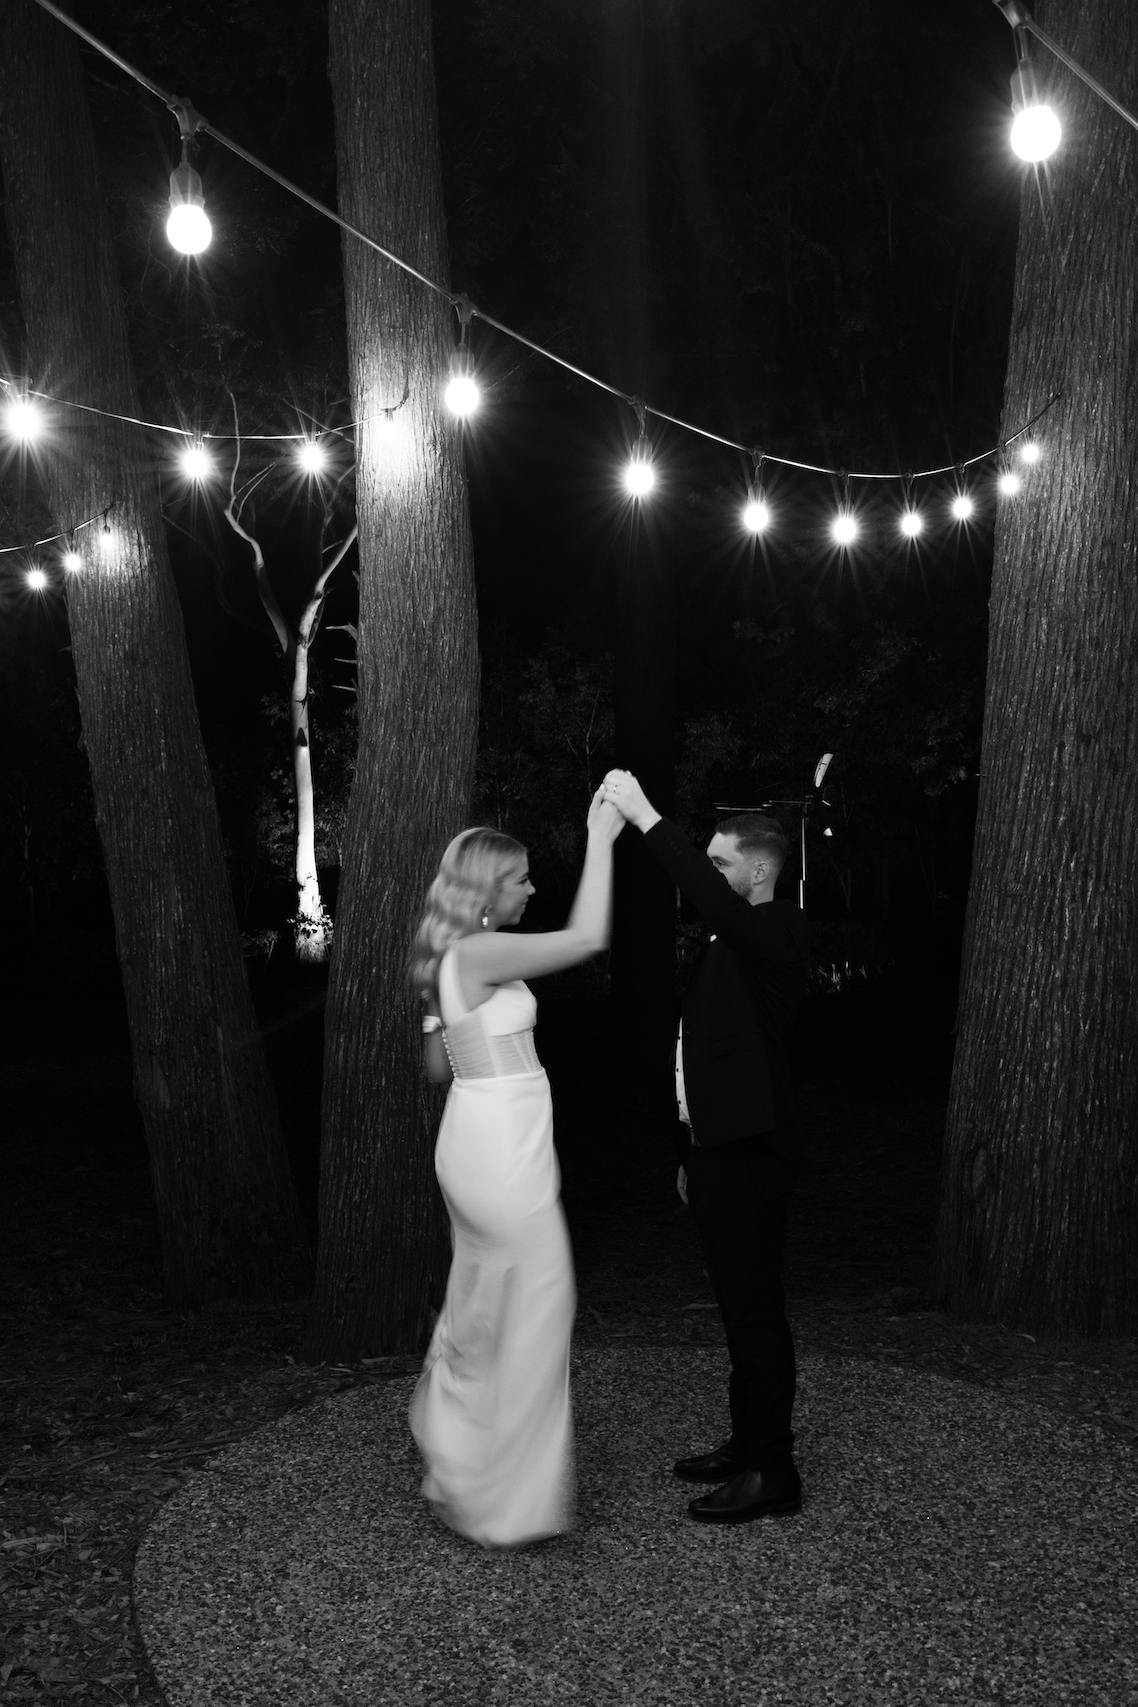 Bride and groom dancing in 'The Woods'